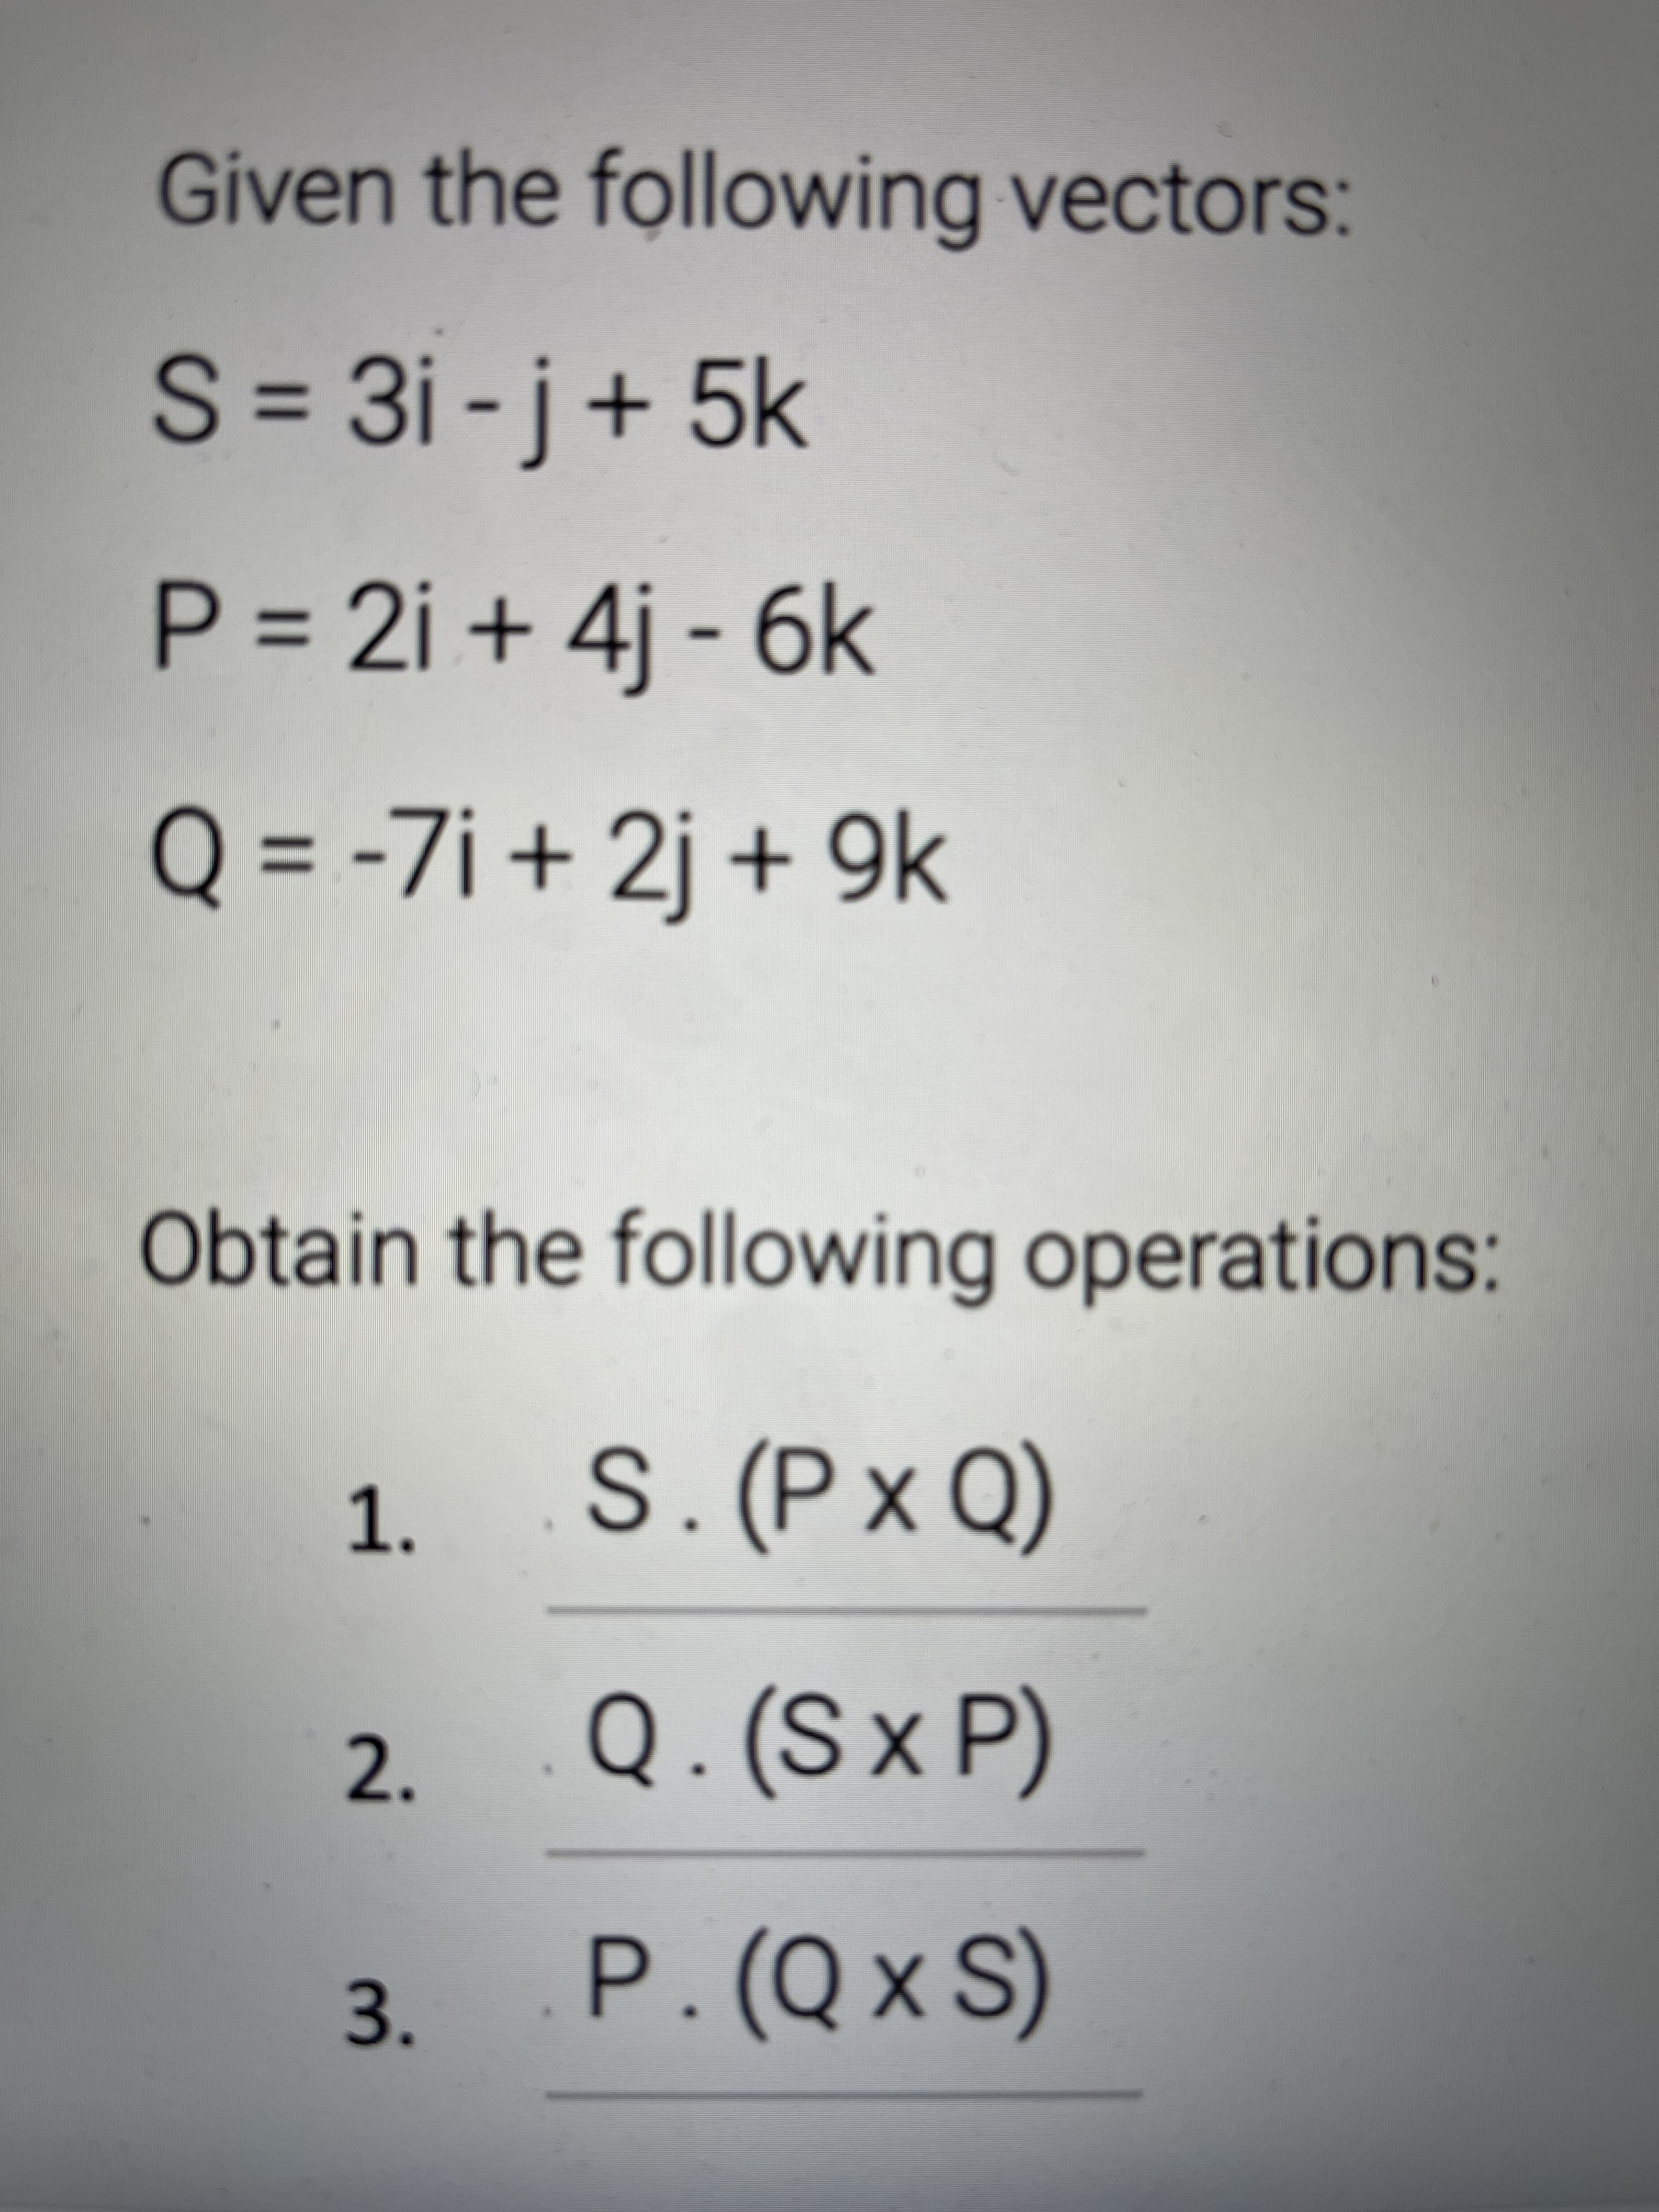 3.
Given the following vectors:
S = 3i -j+ 5k
P = 2i + 4j - 6k
+9K
Q = -7i + 2j + 9k
%3D
Obtain the following operations:
1. S. (P x Q)
Q. (Sx P)
2.
P. (Qx S)
